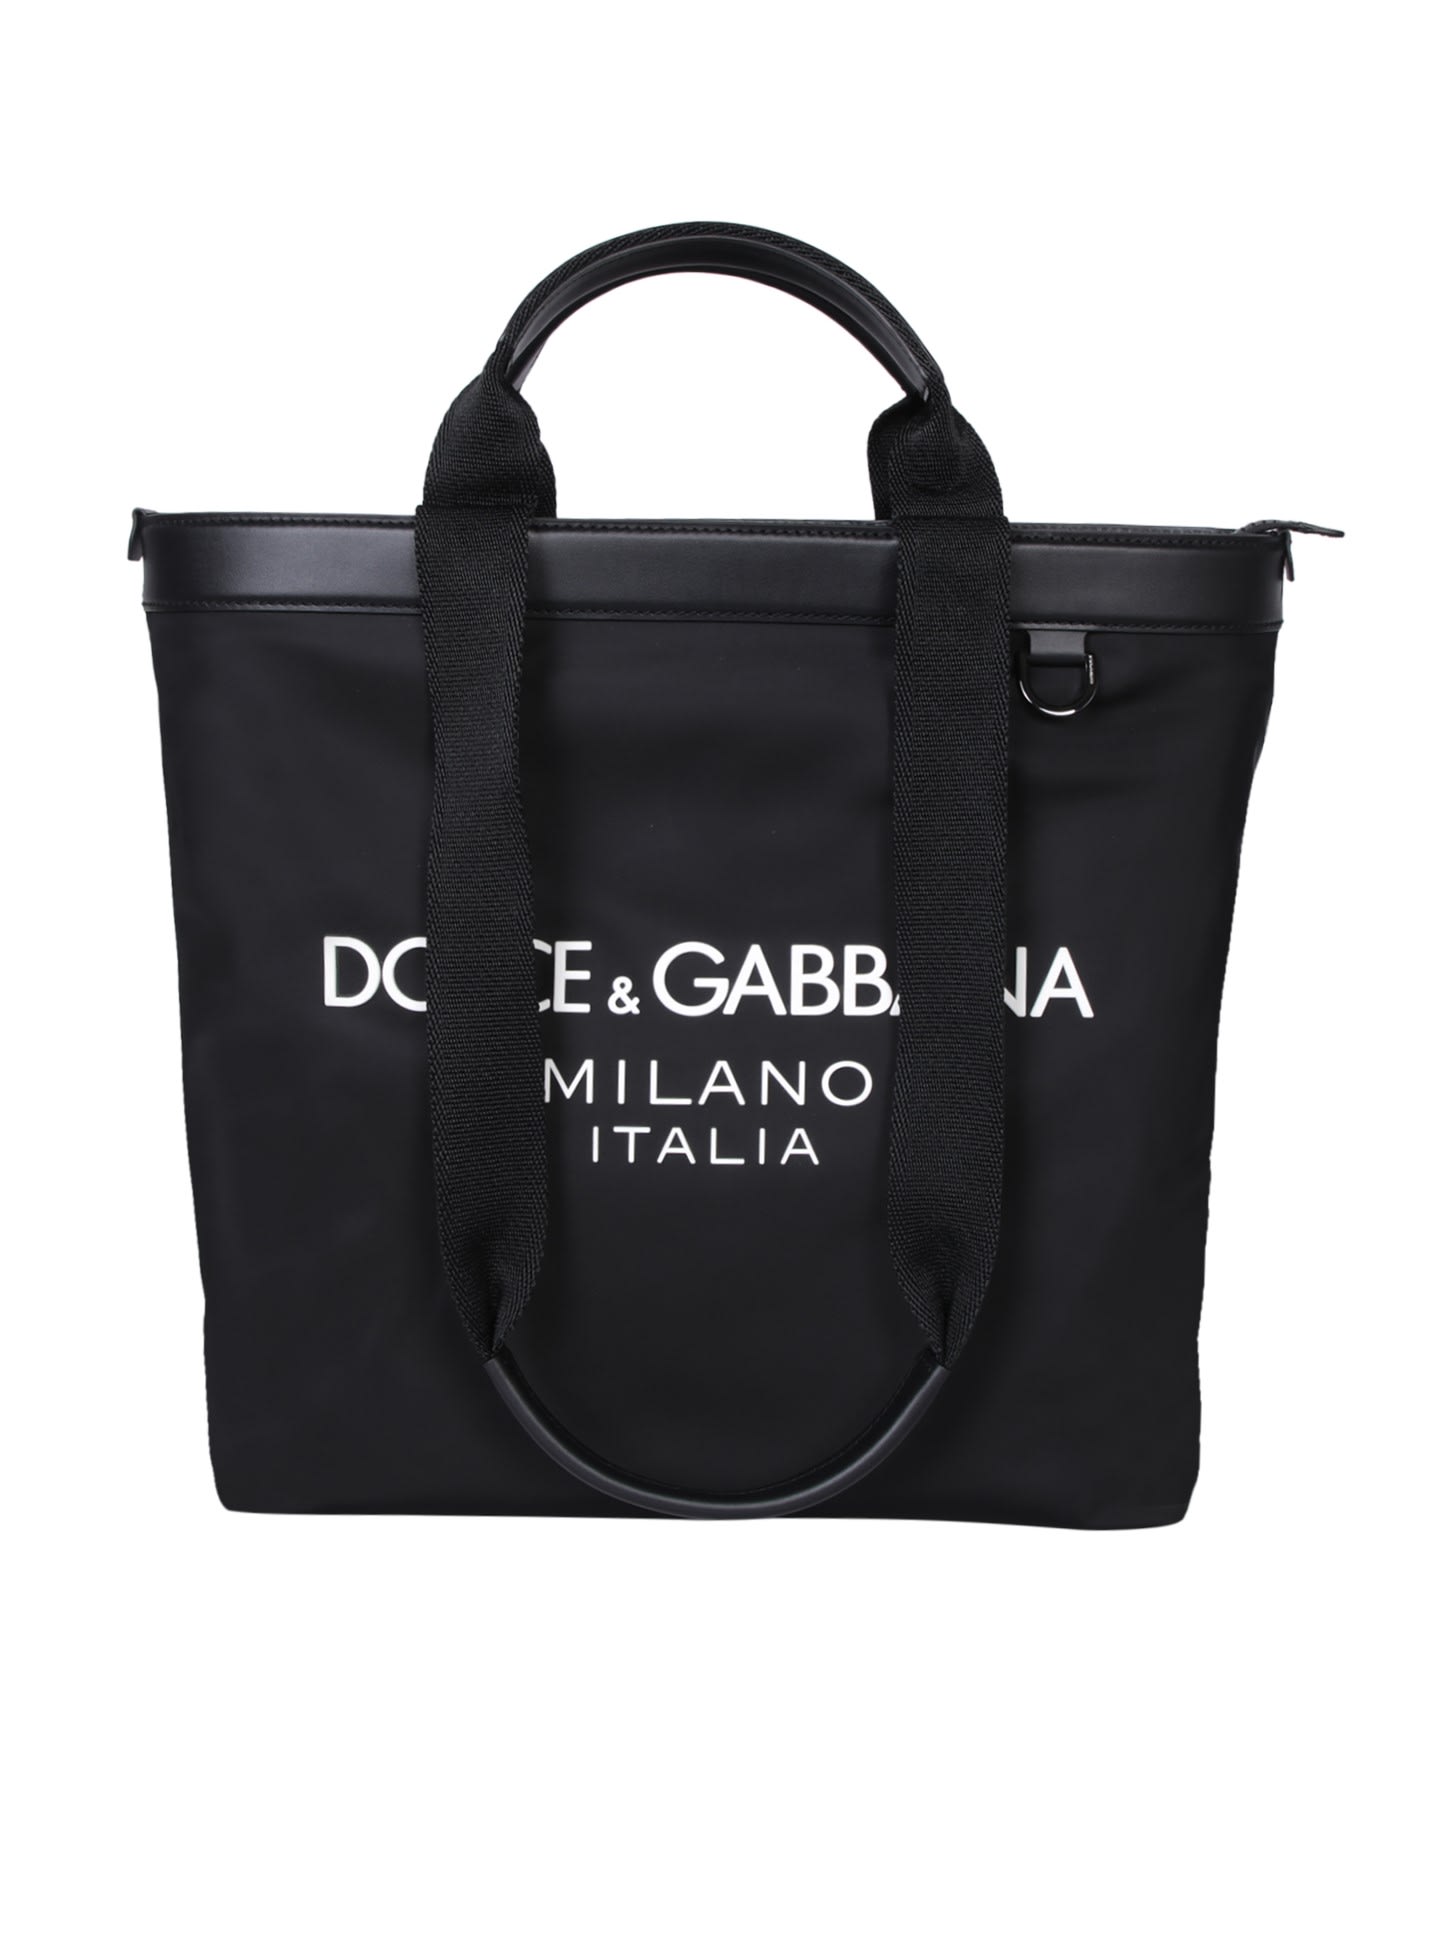 Dolce & Gabbana Logo Black Tote Bag